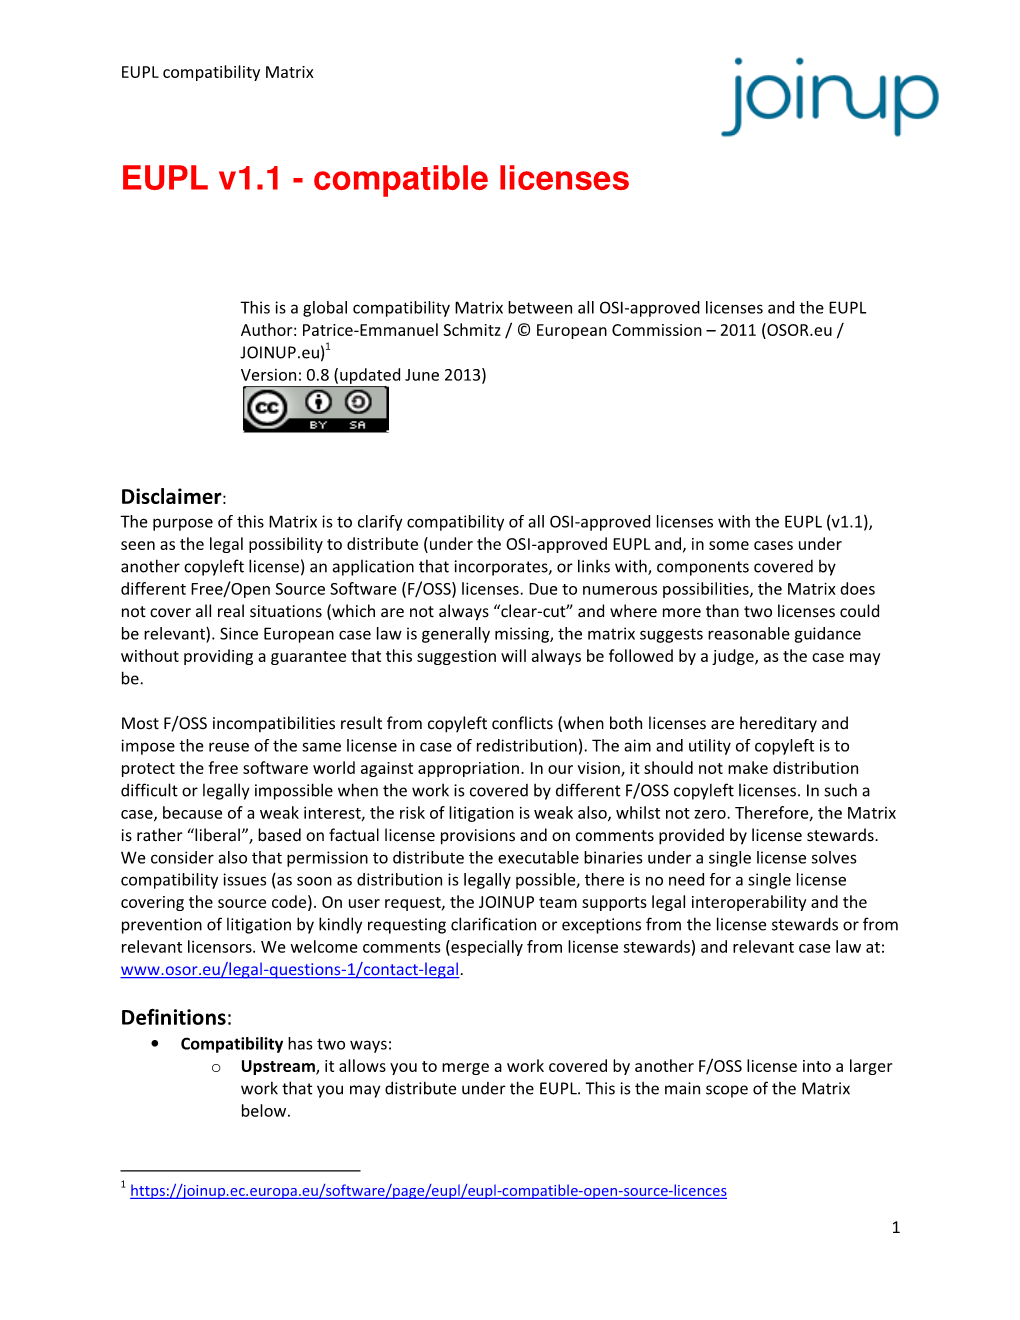 EUPL V1.1 - Compatible Licenses